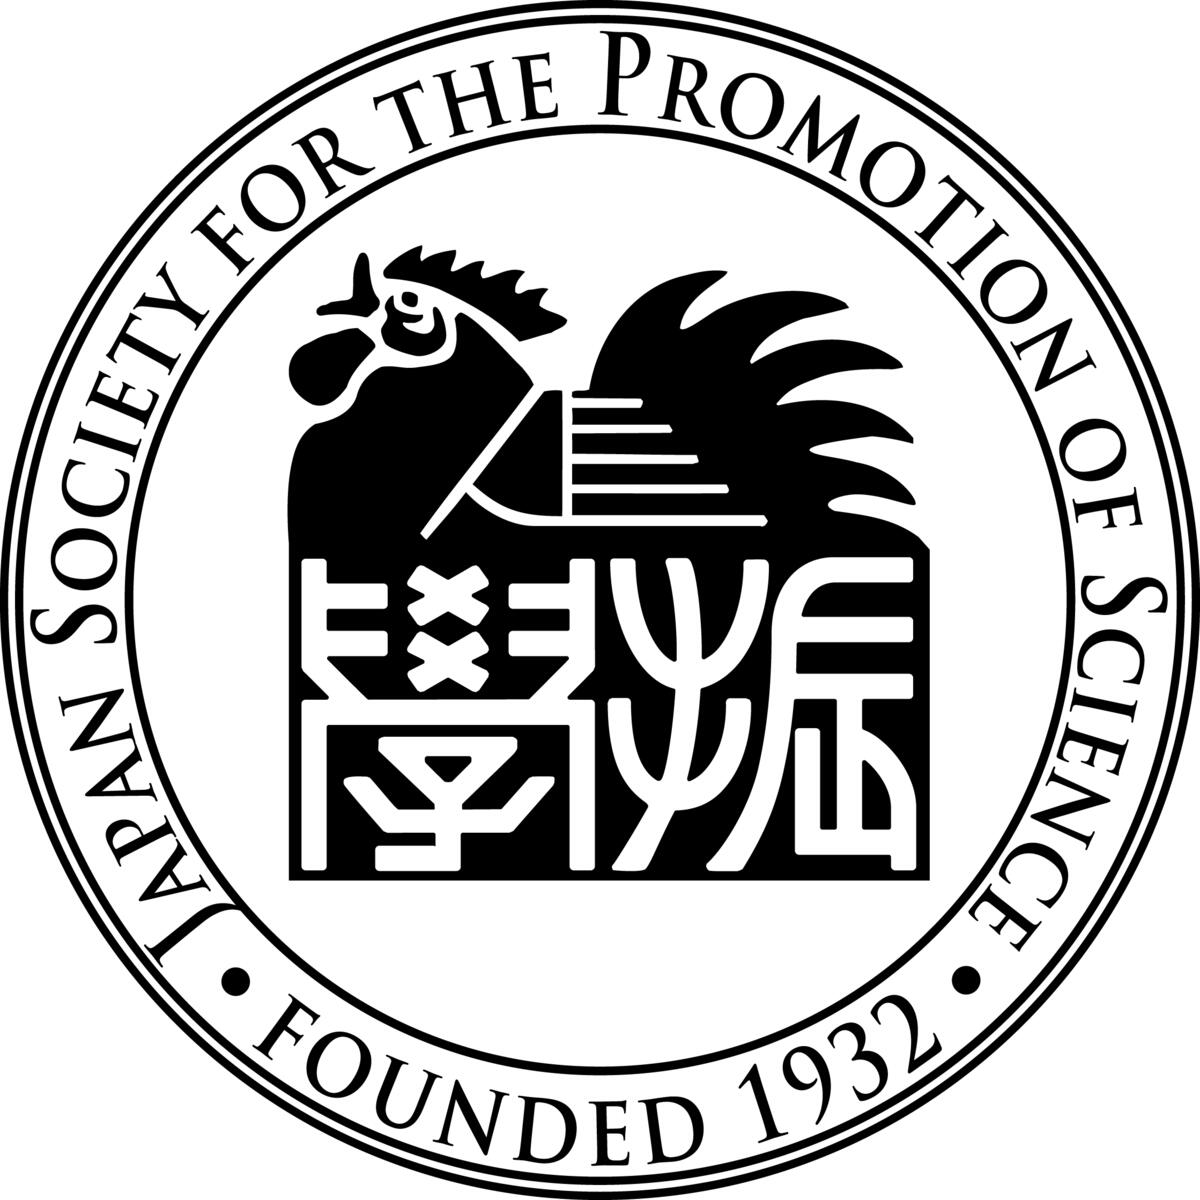 Memory-logo - UC Berkeley Sutardja Center